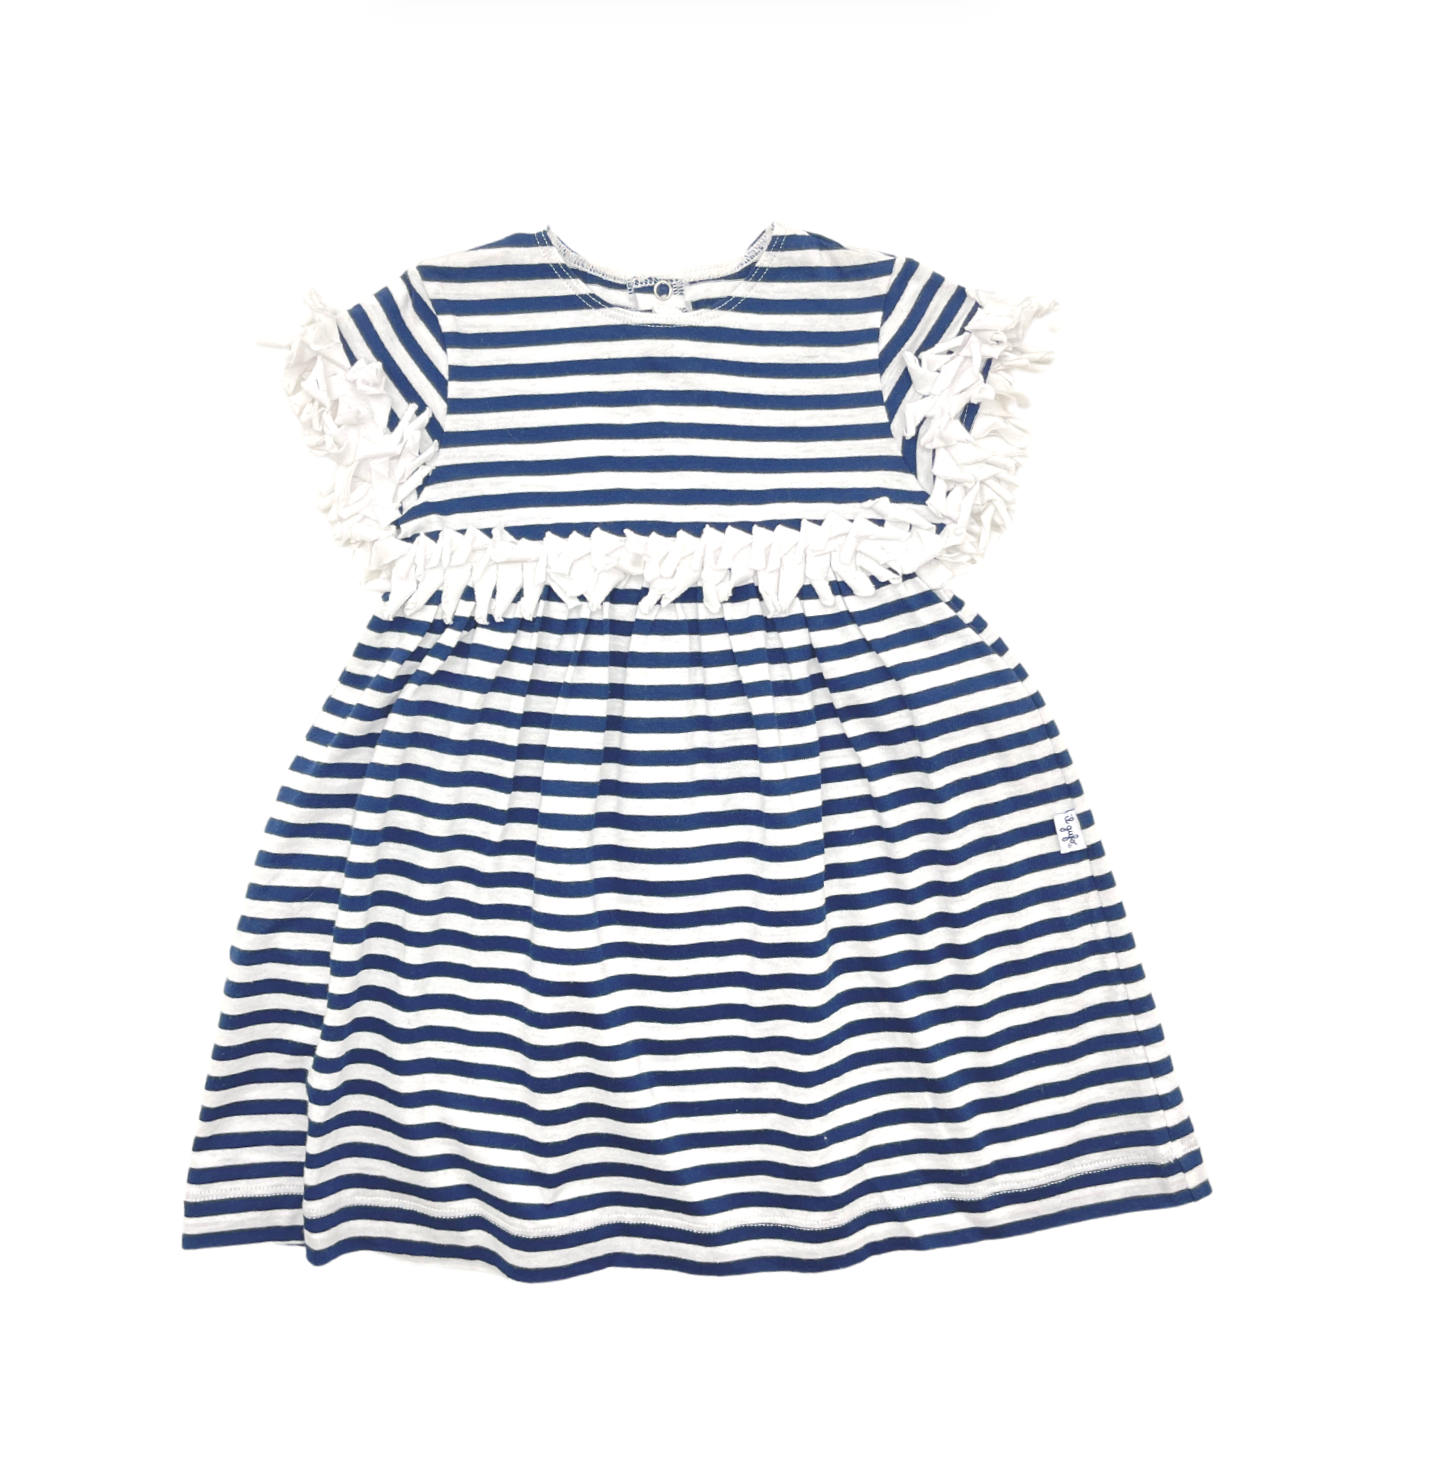 IL GUFO - Striped dress - 1 year old